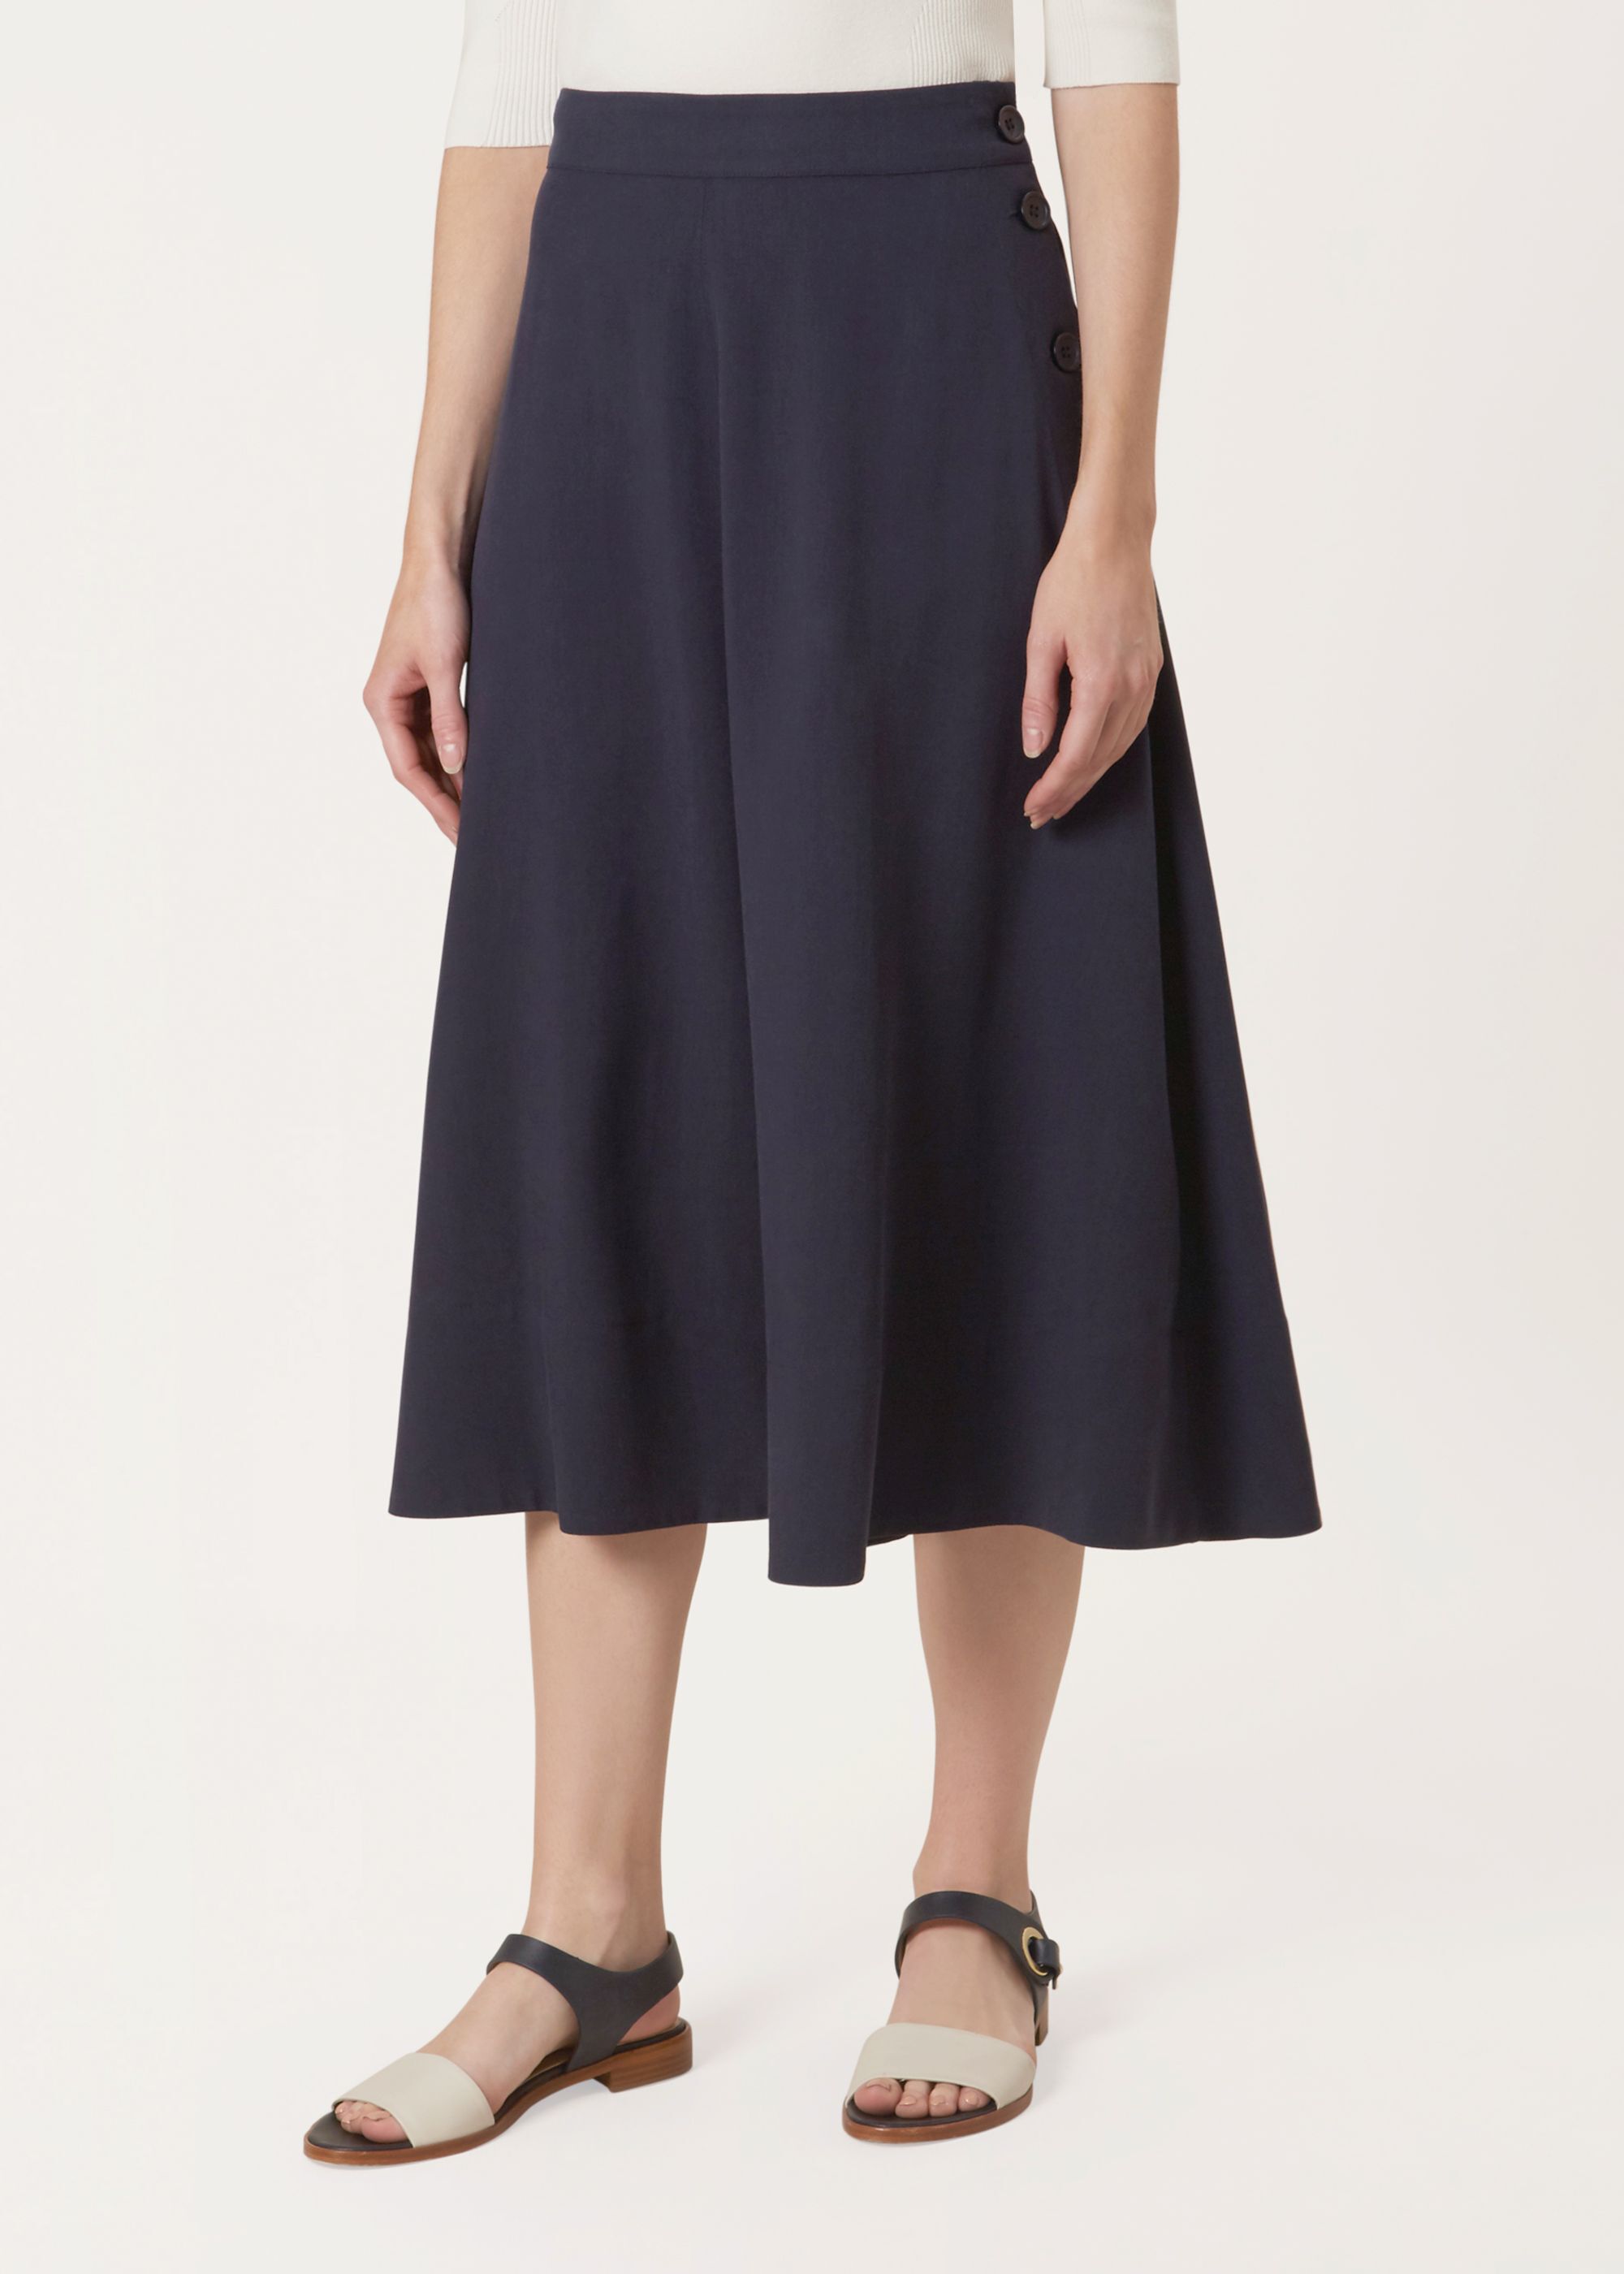 Hobbs Marissa Skirt Midi A-Line | eBay